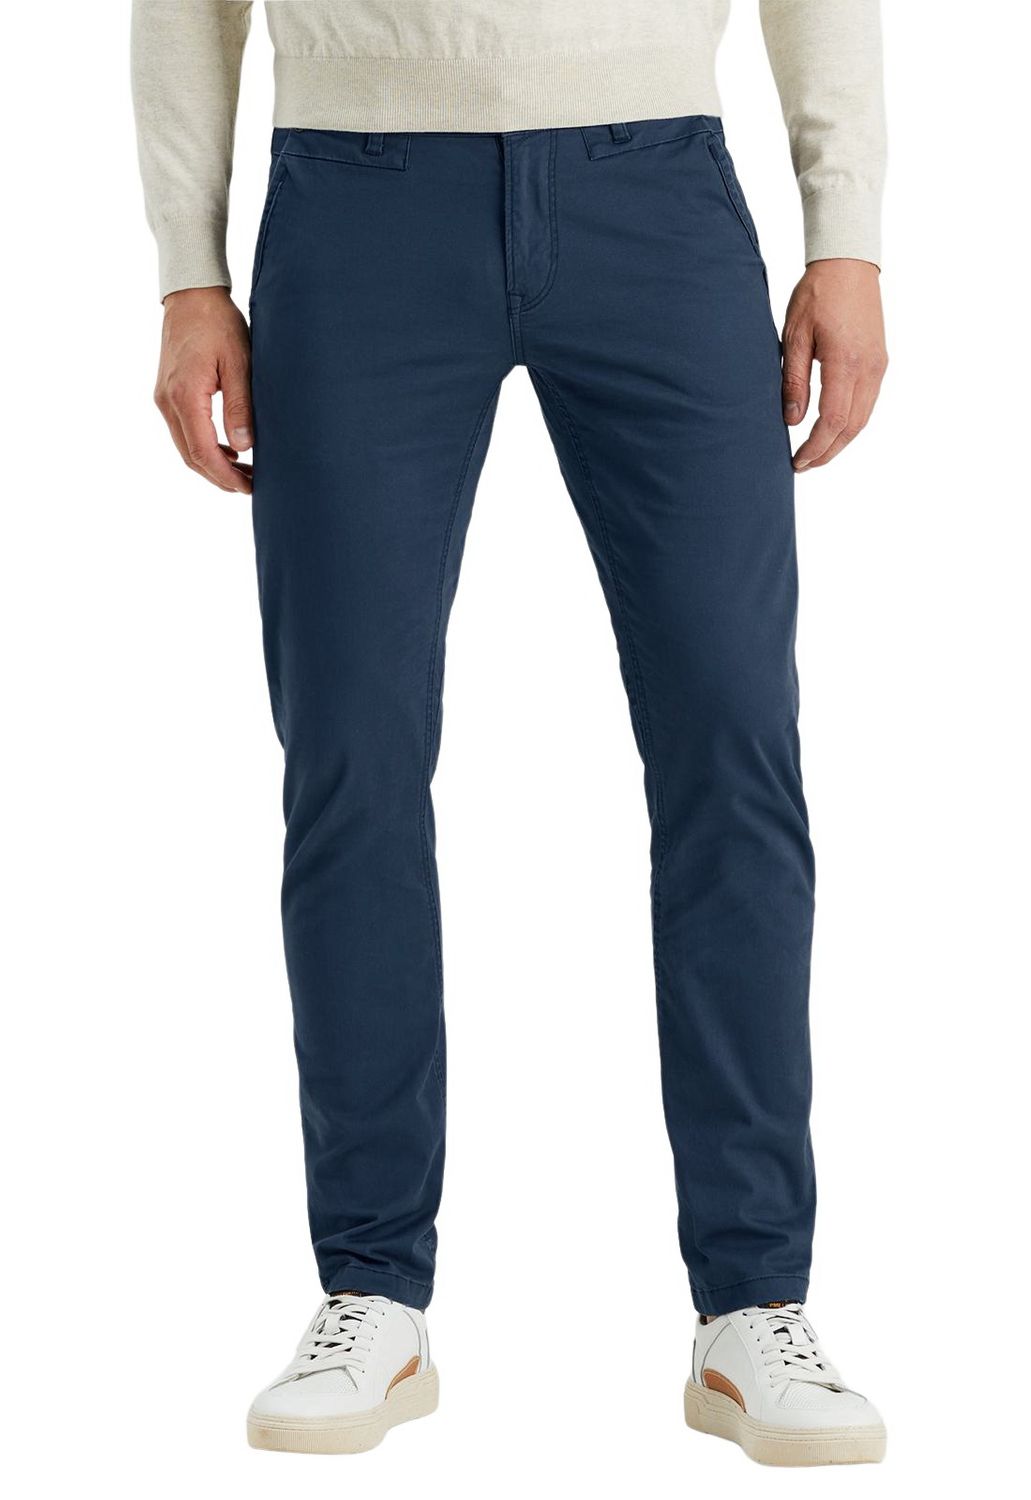 Тканевые брюки PME Legend Stoff/Chino TWIN WASP CHINO regular/straight, синий брюки lee regular chino синий